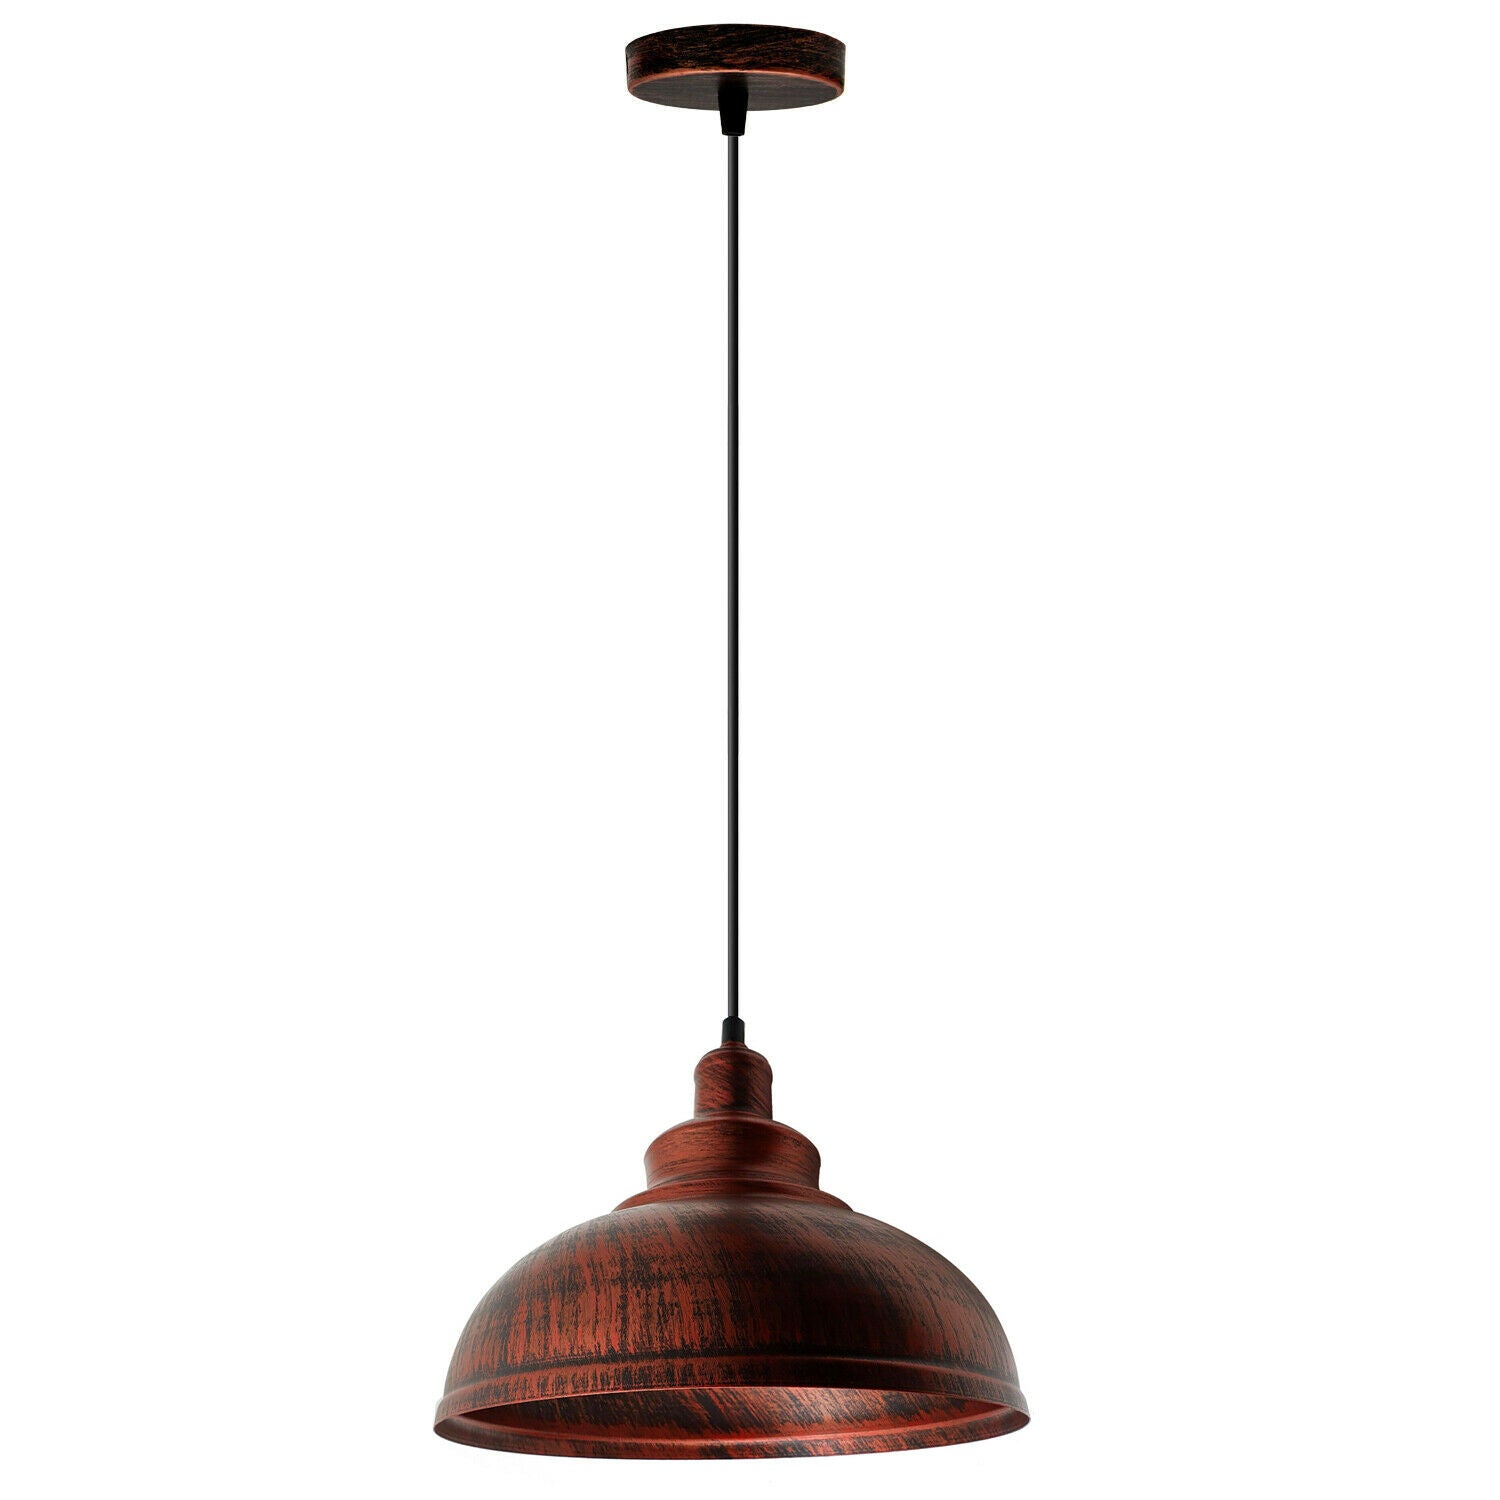 Rustic Red Retro Industrial Metal Dome Pendant Lamp Shade